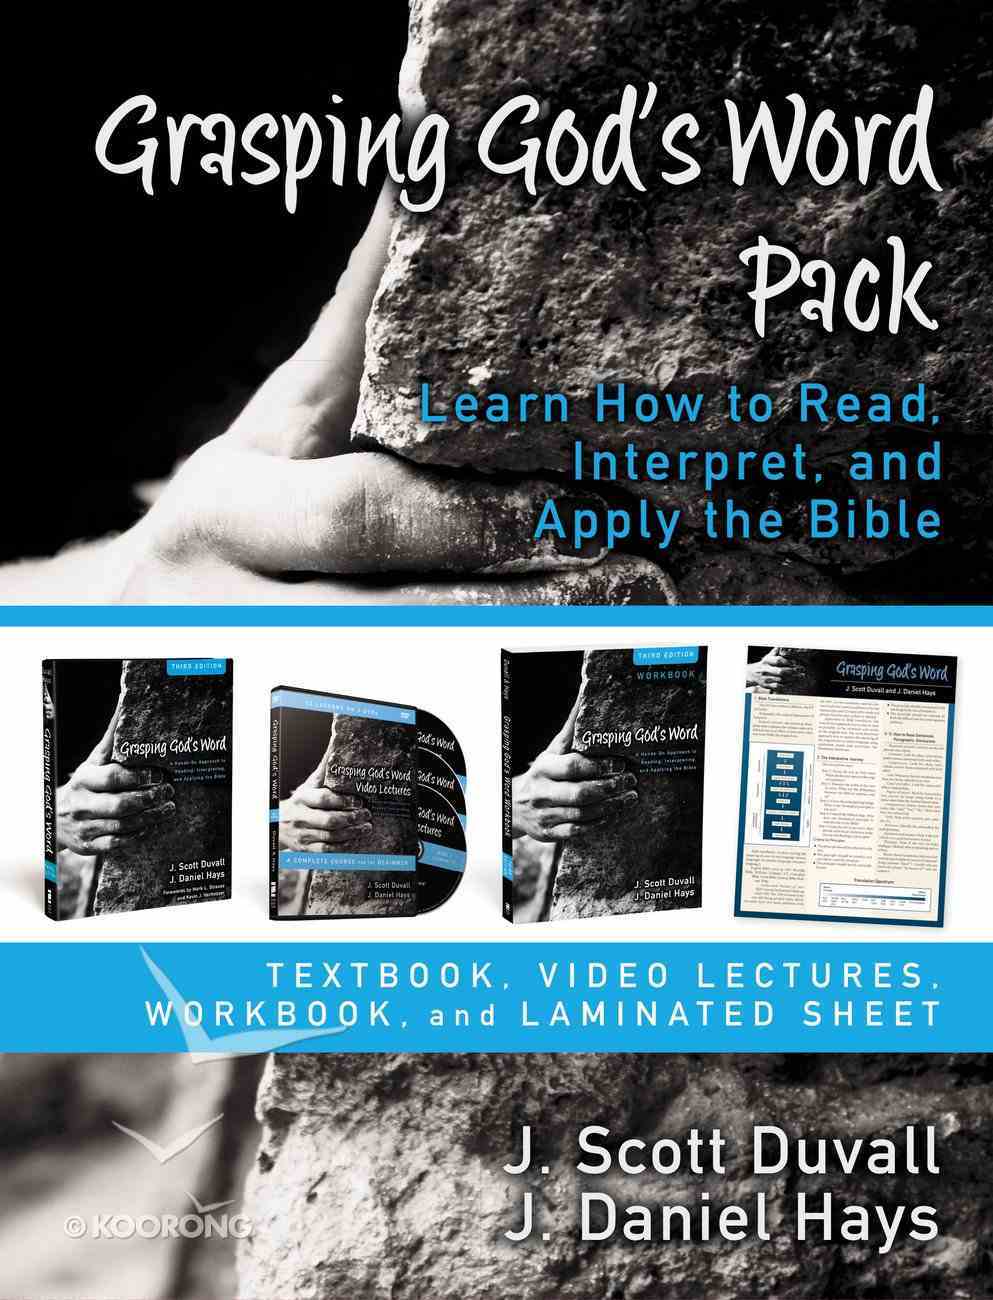 Grasping God's Word Pack Pack